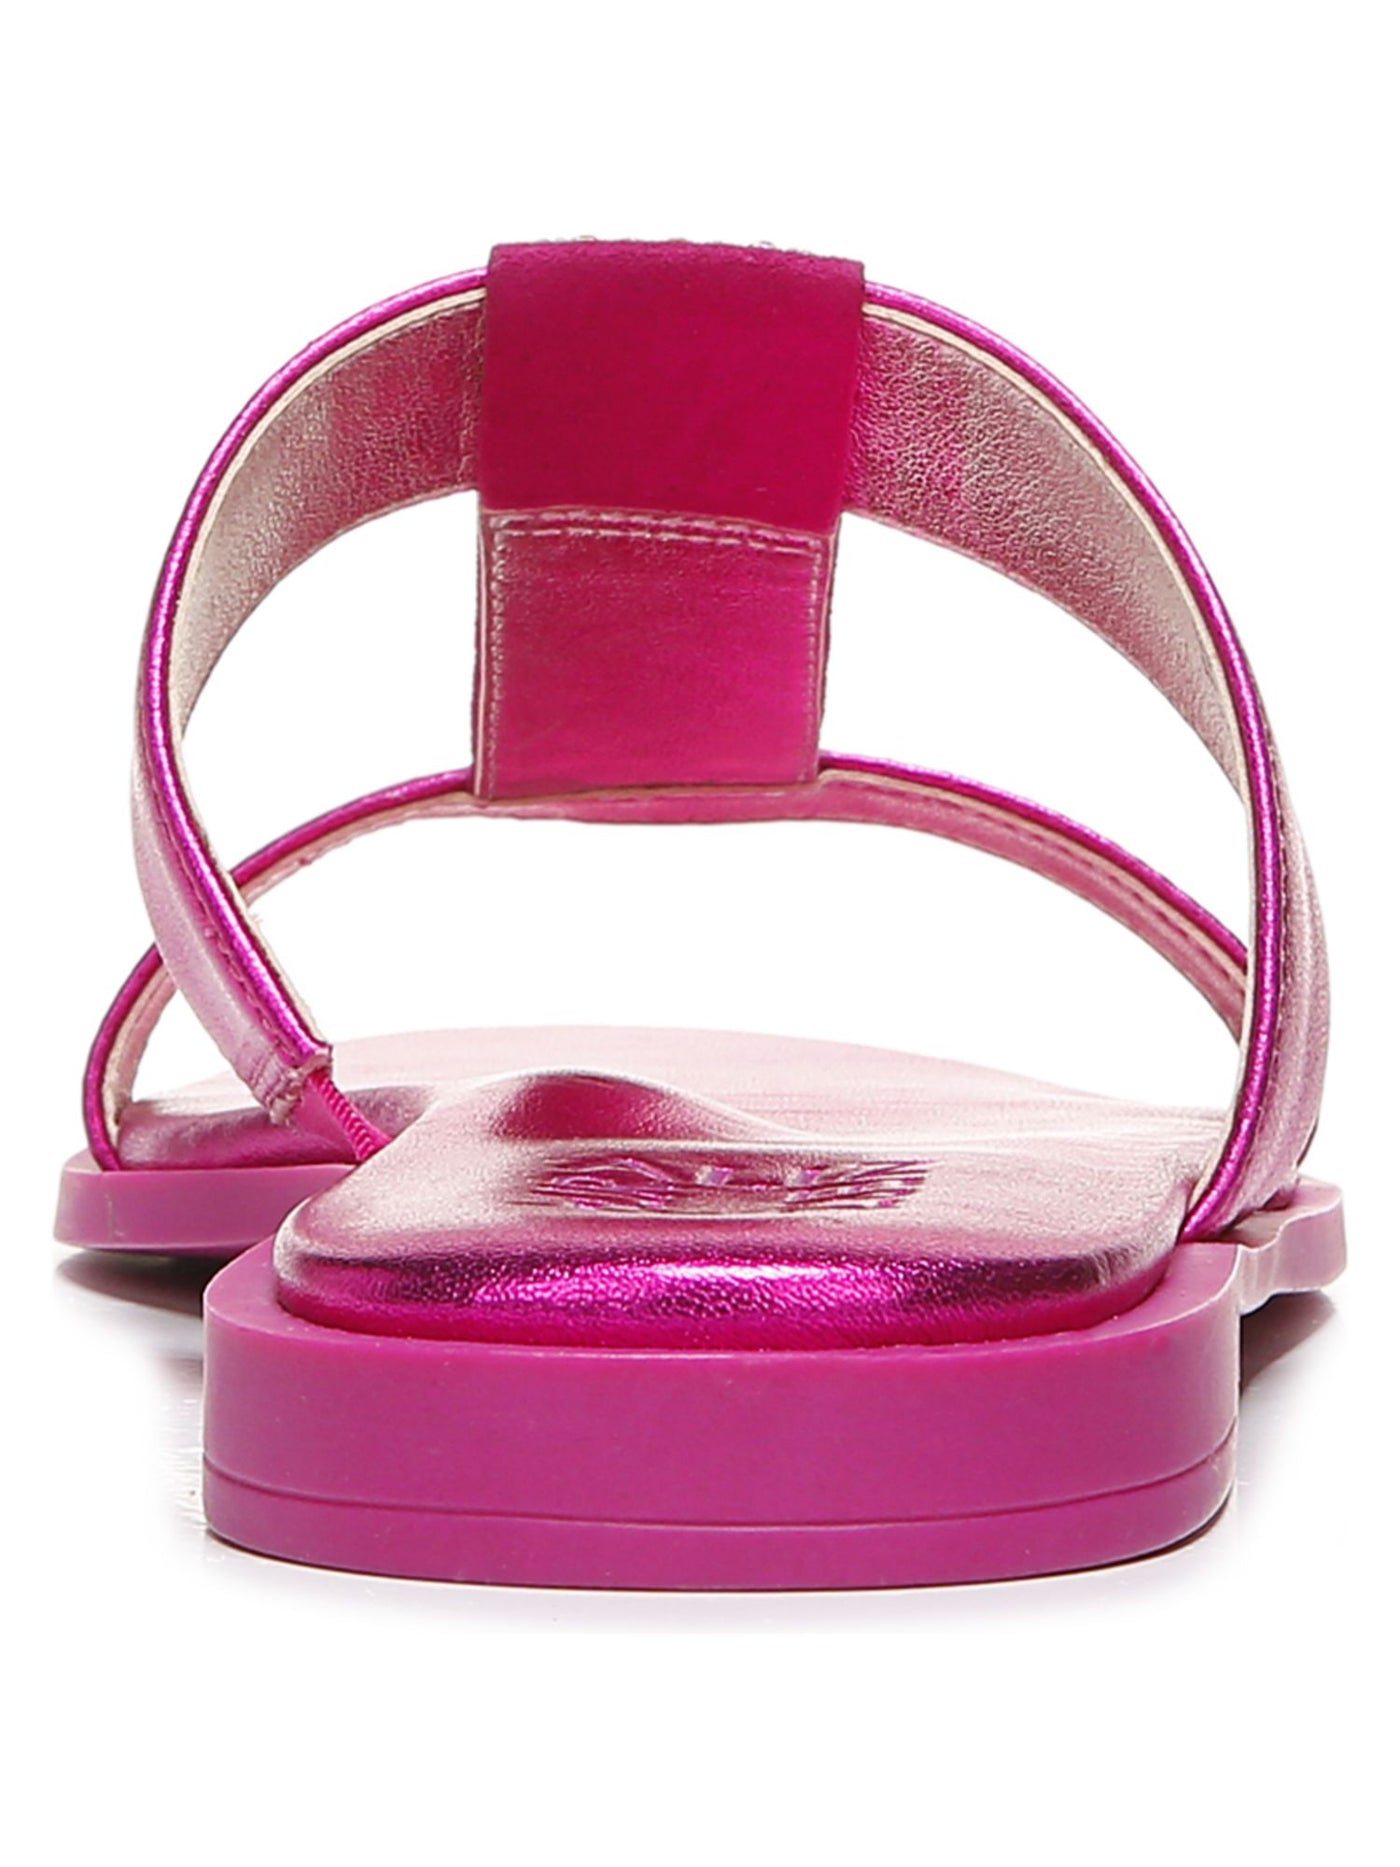 NATURALIZER Womens Pink Rhinestone Non-Slip Farica Round Toe Slip On Leather Slide Sandals Shoes 8 W